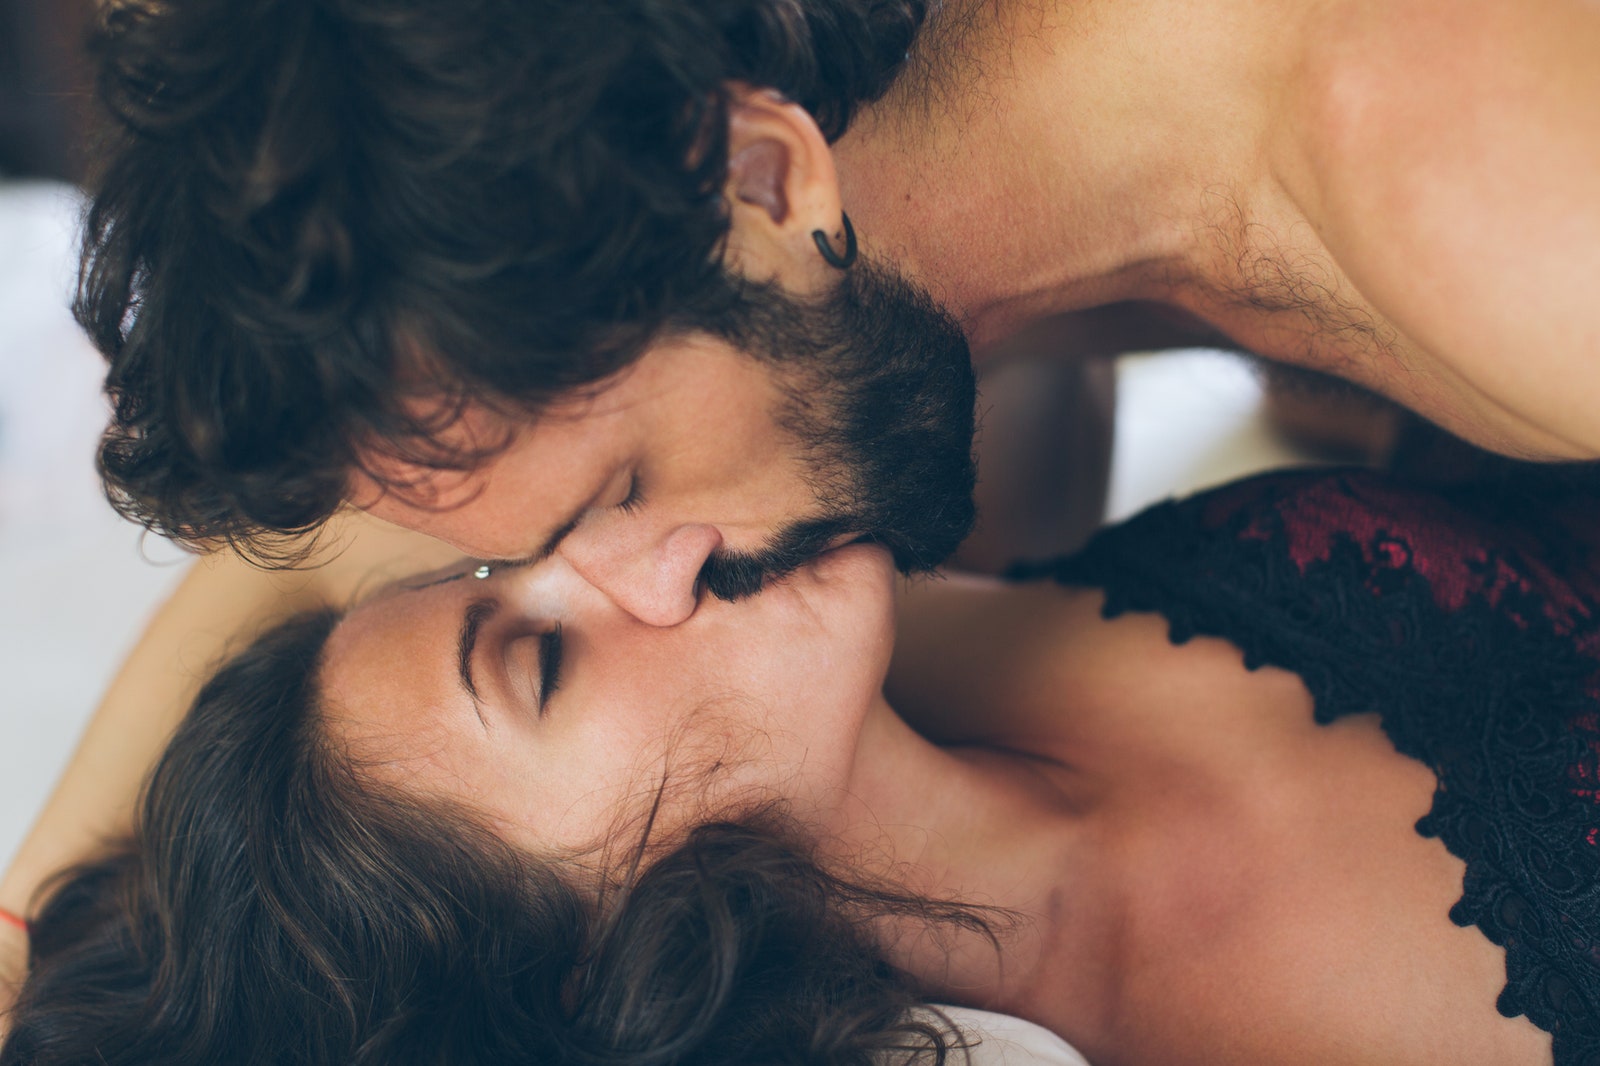 brittany duquette recommends Couples Having Sex Images